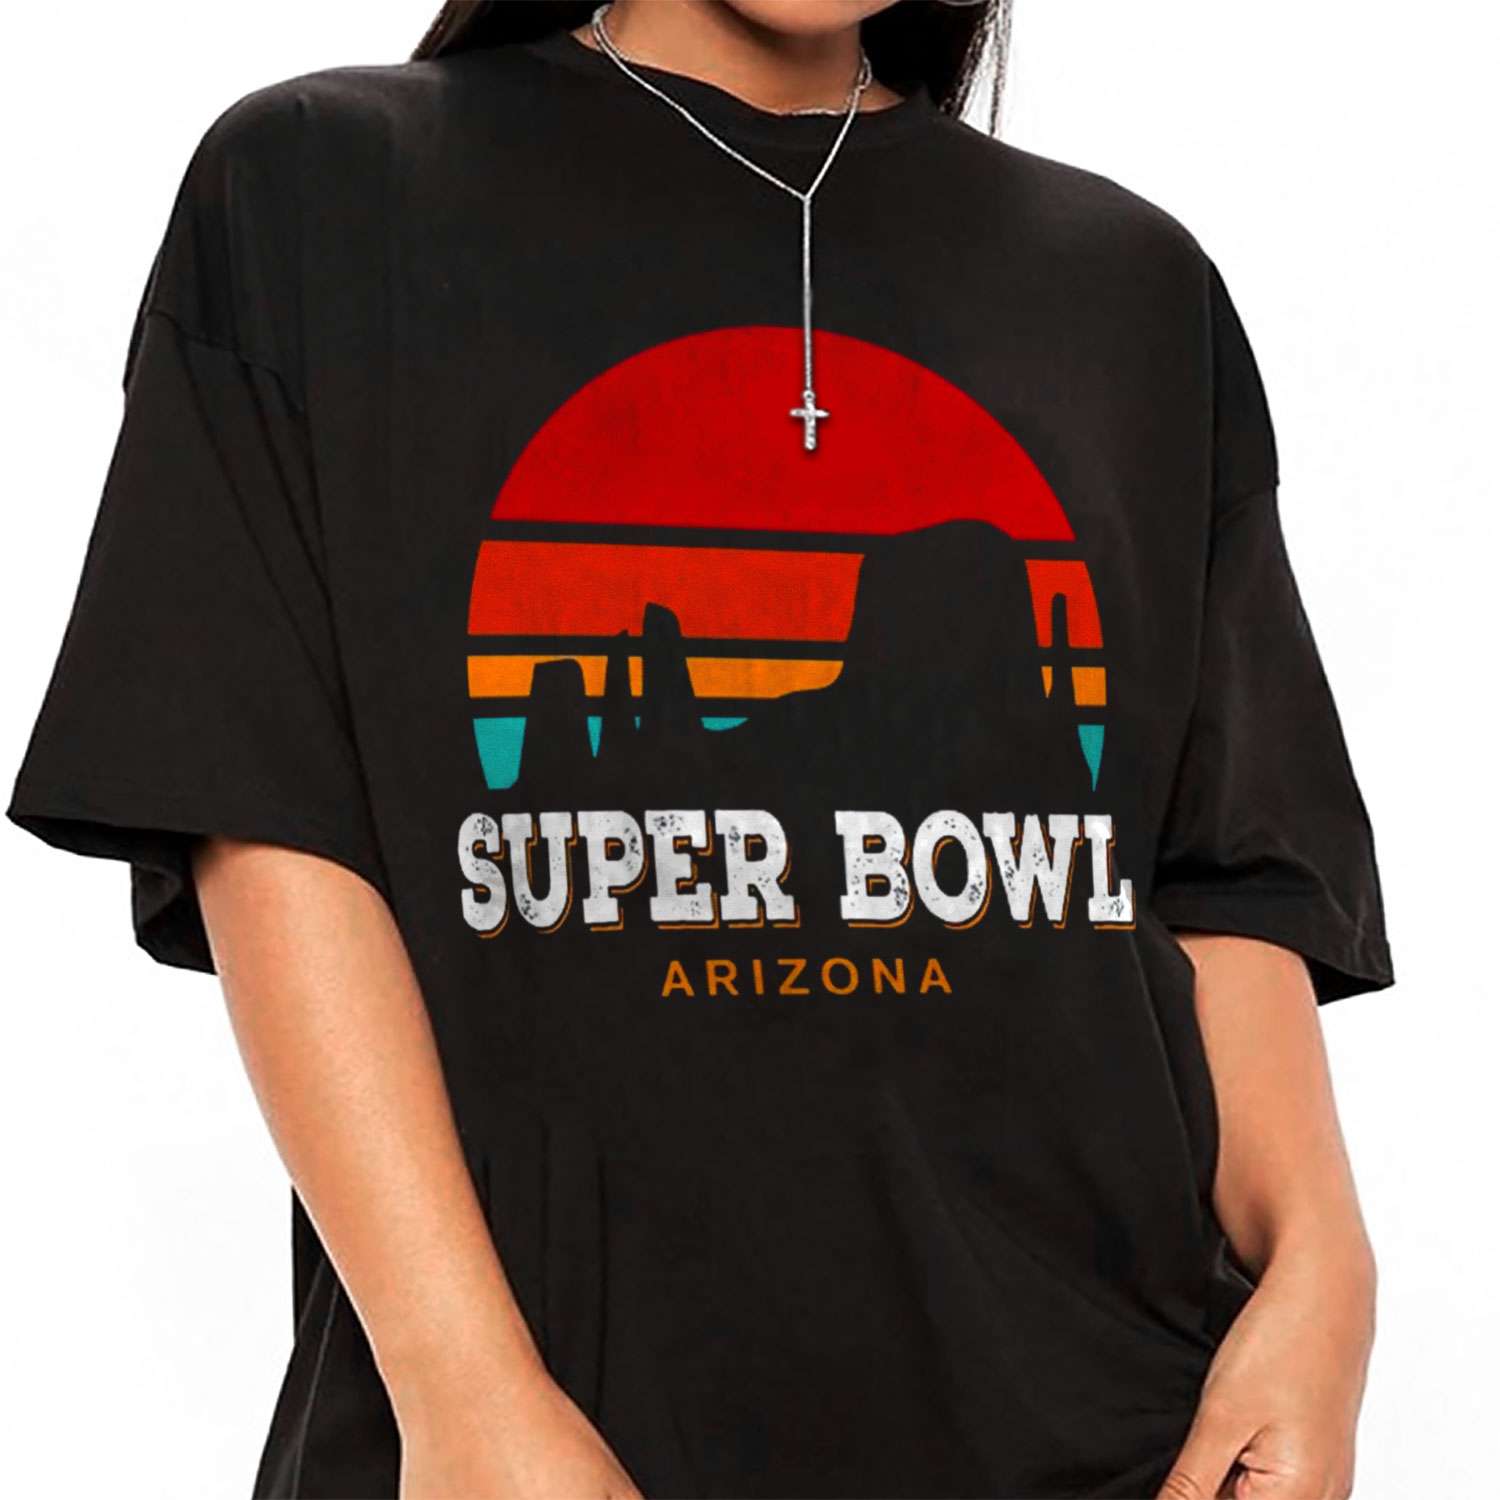 Super Bowl Arizona T-shirt